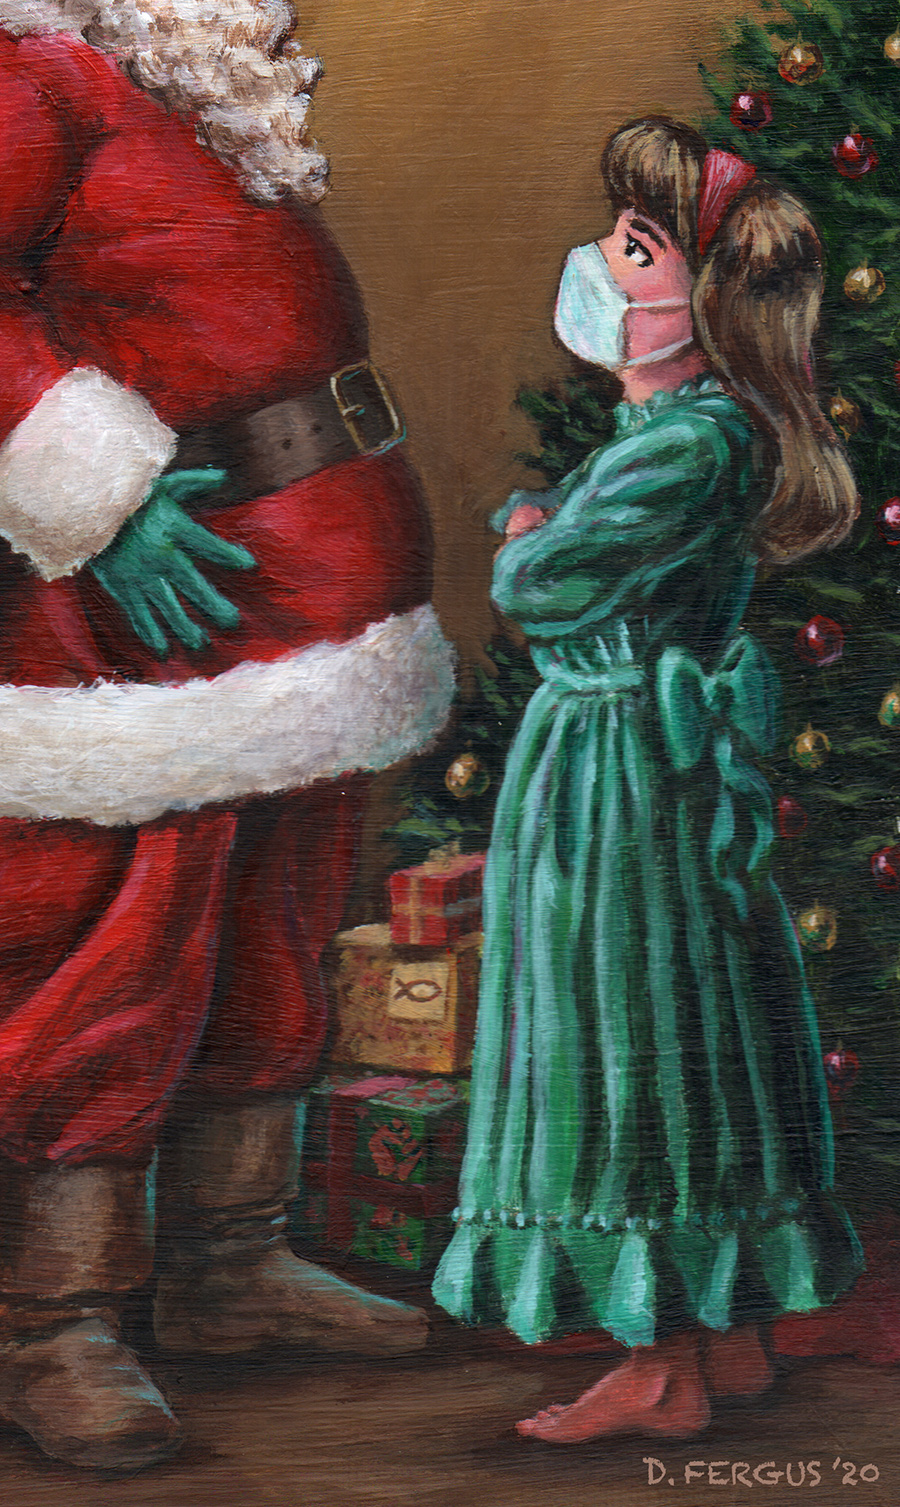 Artwork: 'Mask up, Santa'